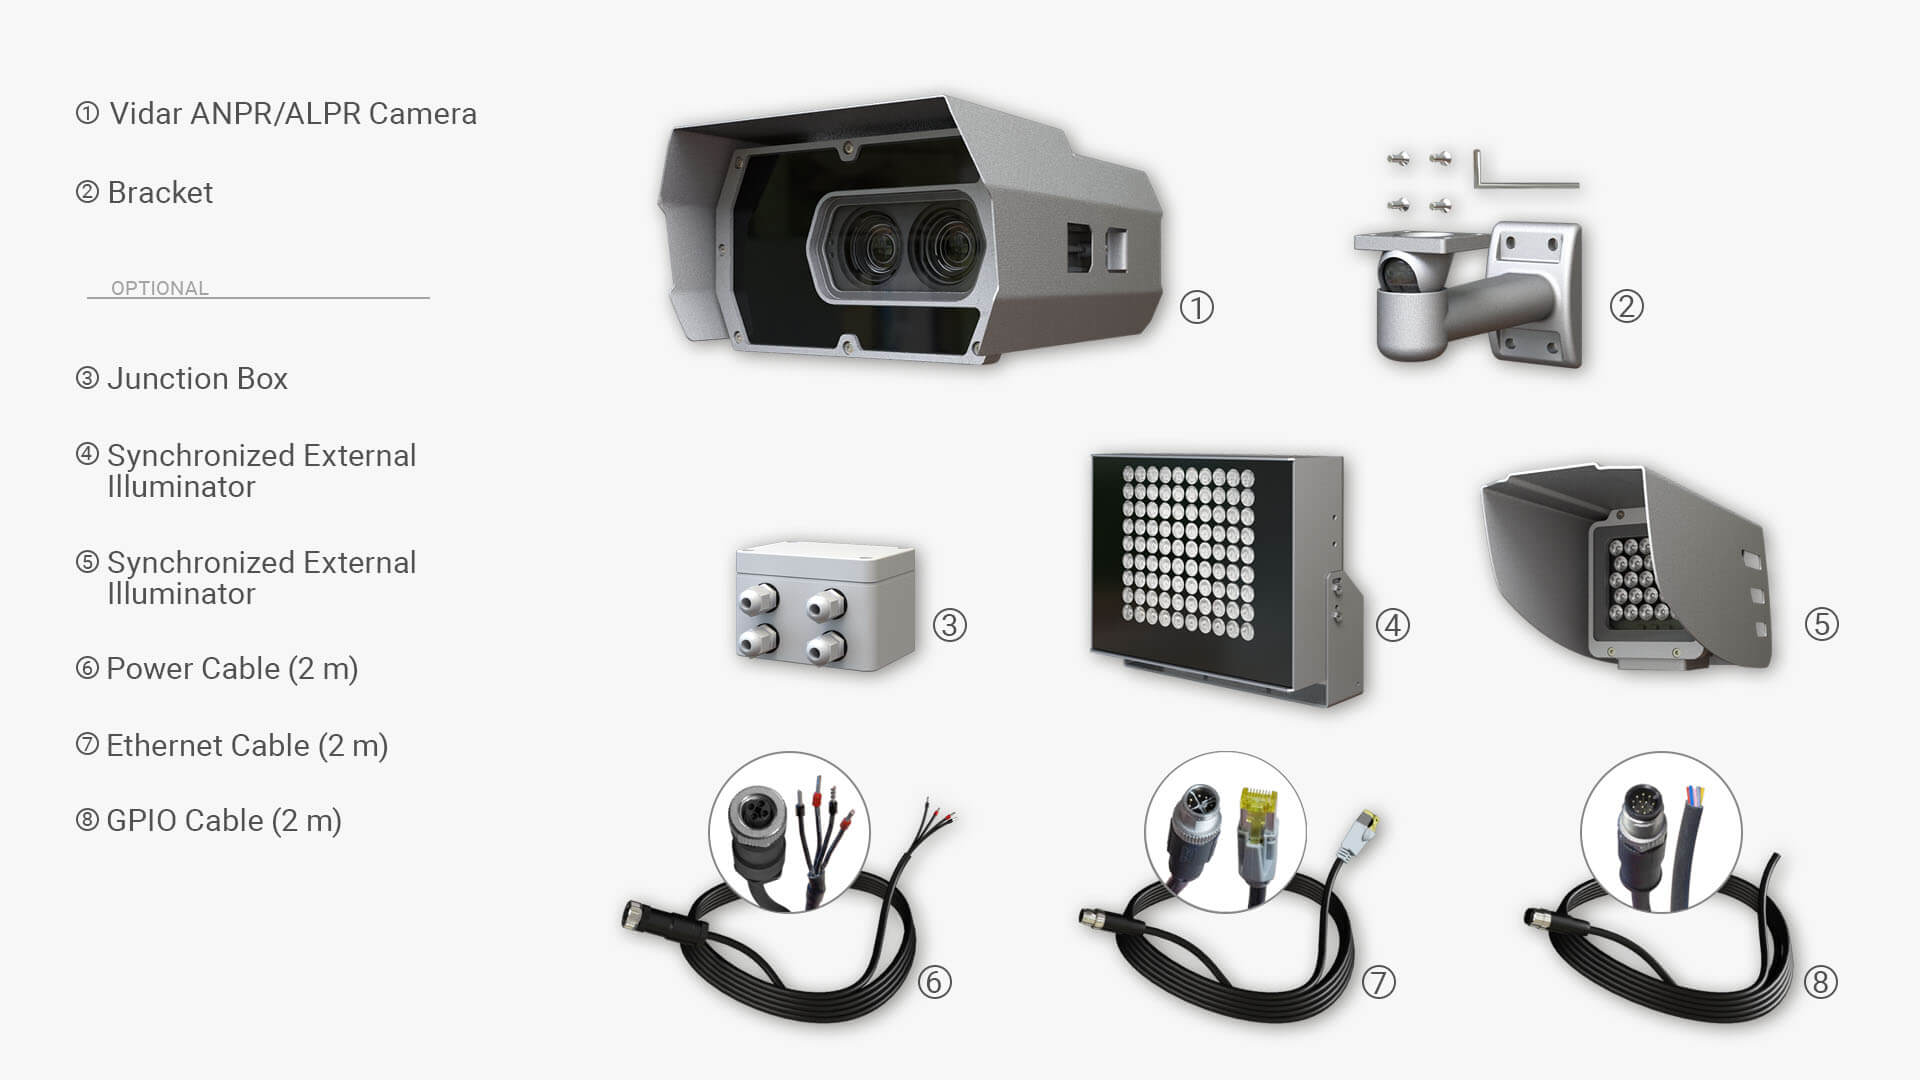 Included and optional parts of Vidar ANPR camera set